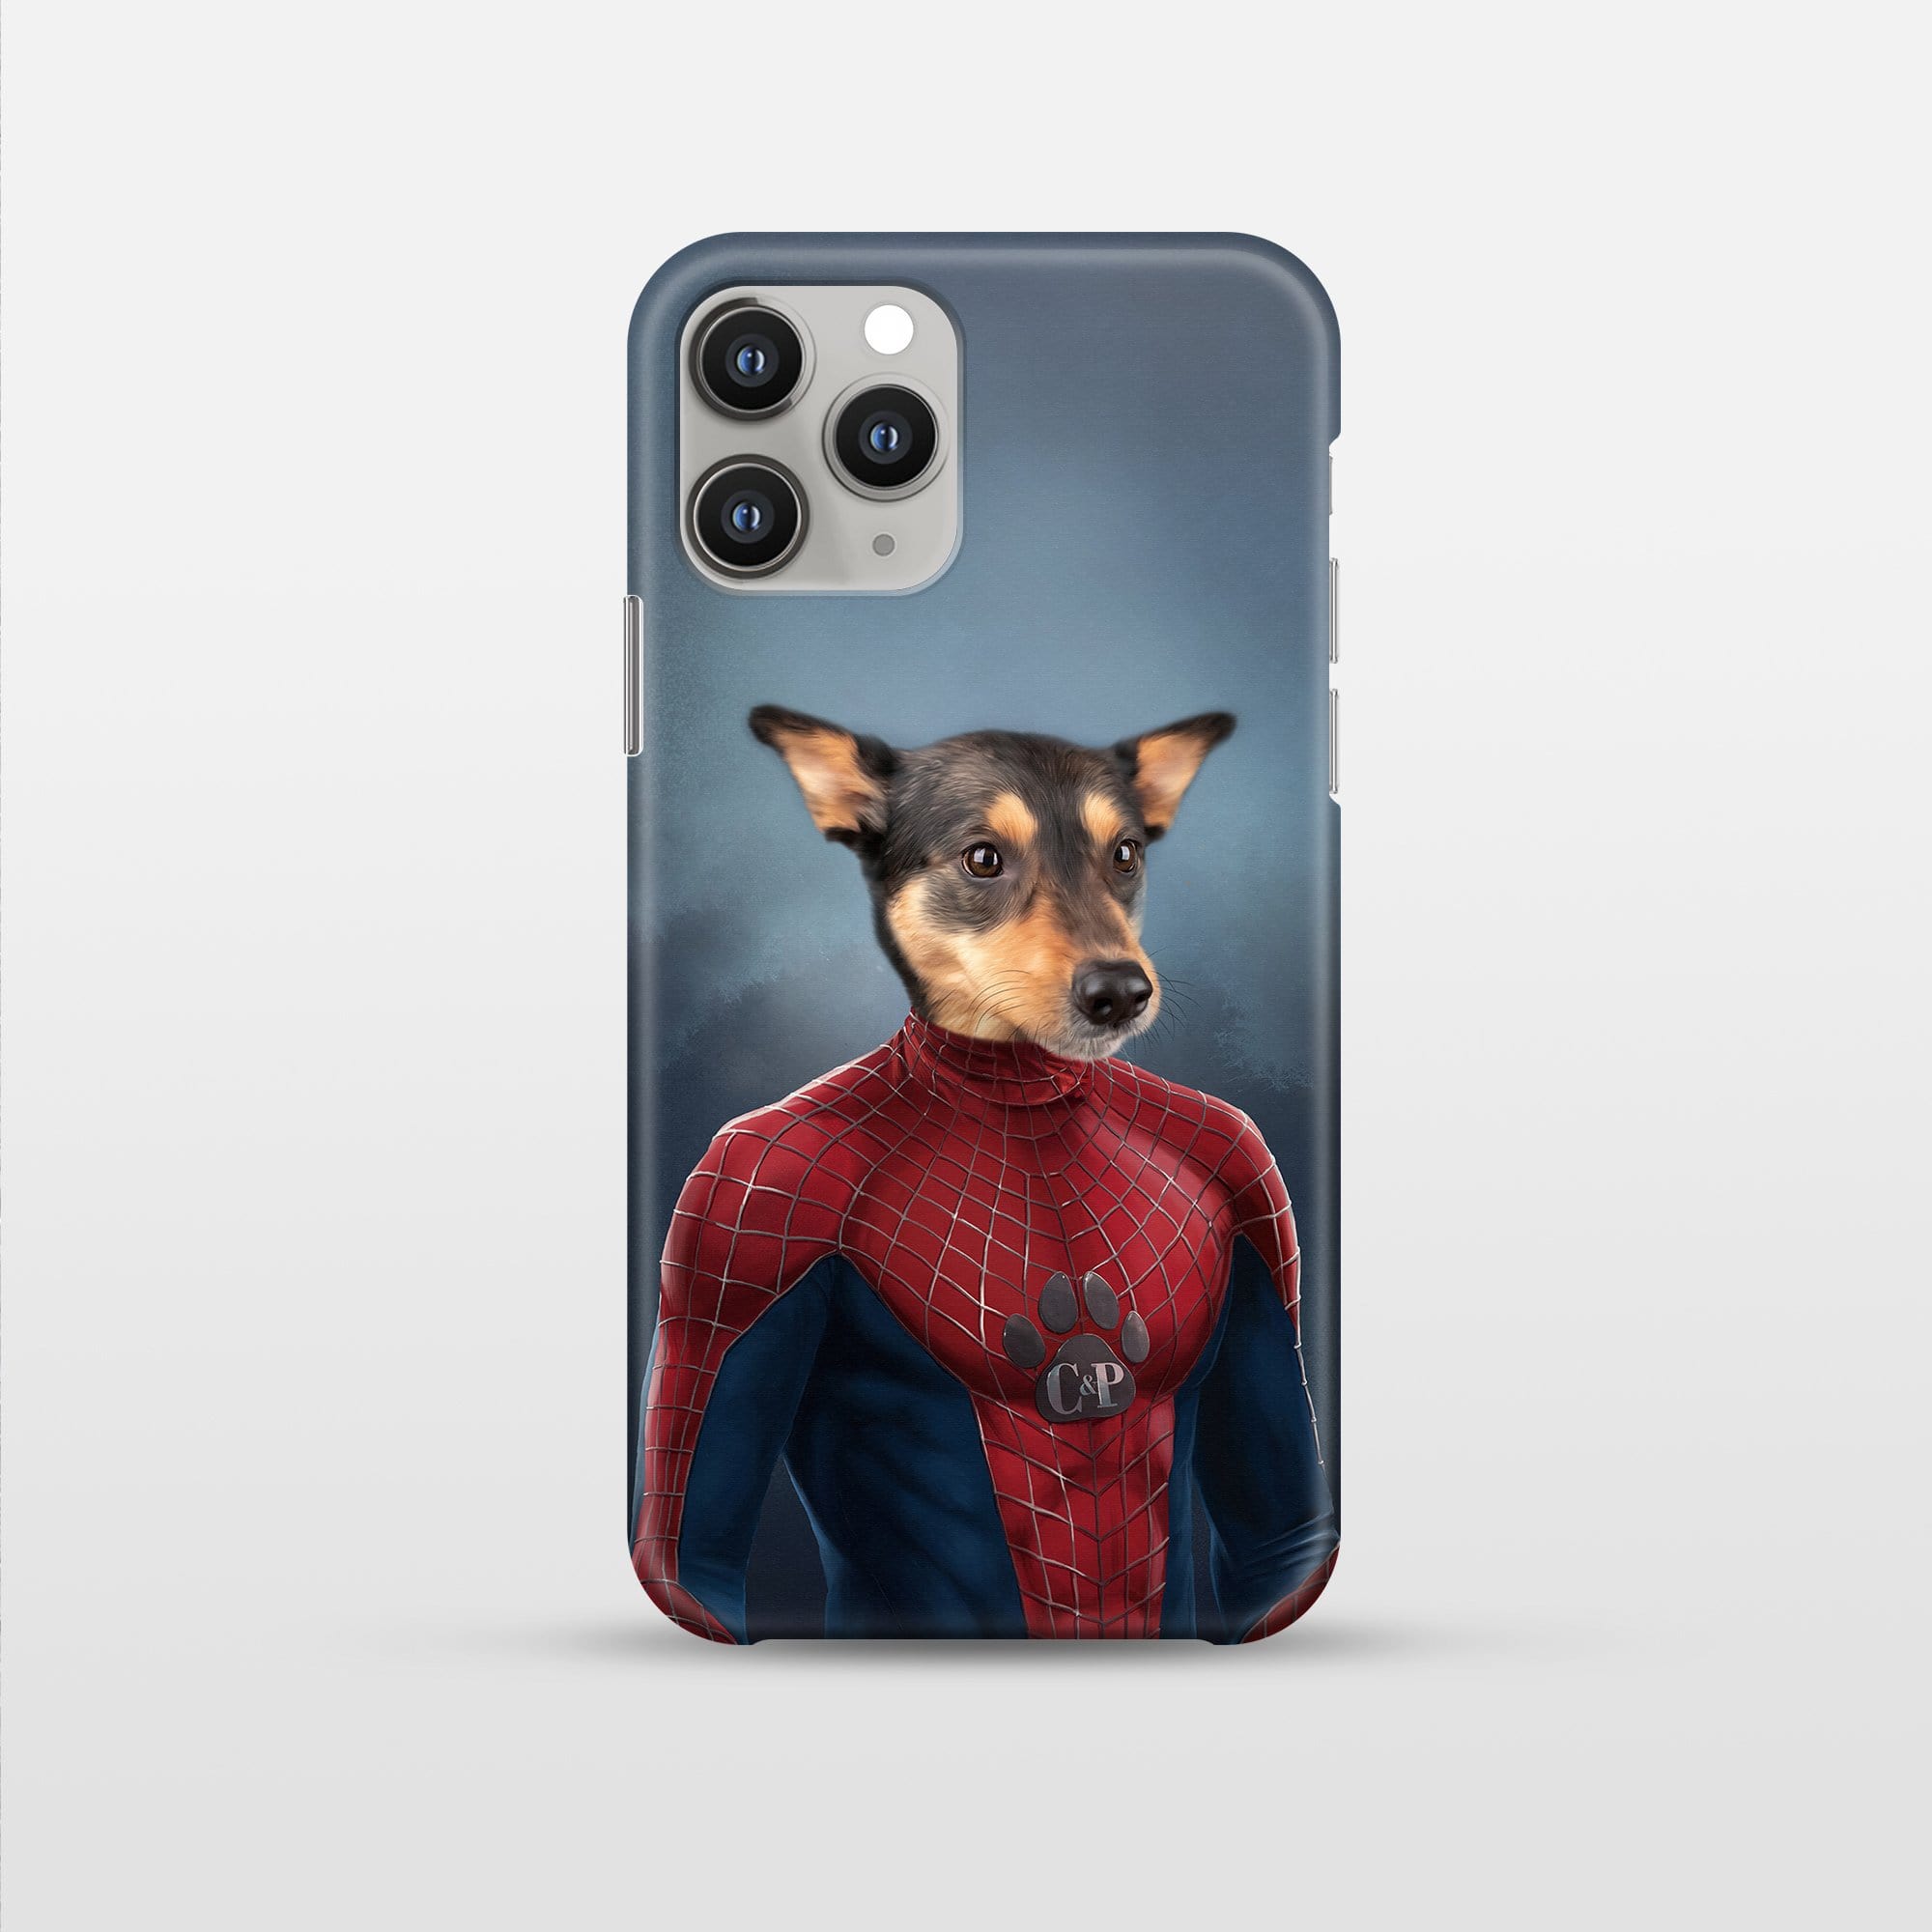 The Spiderpet - Pet Art Phone Case